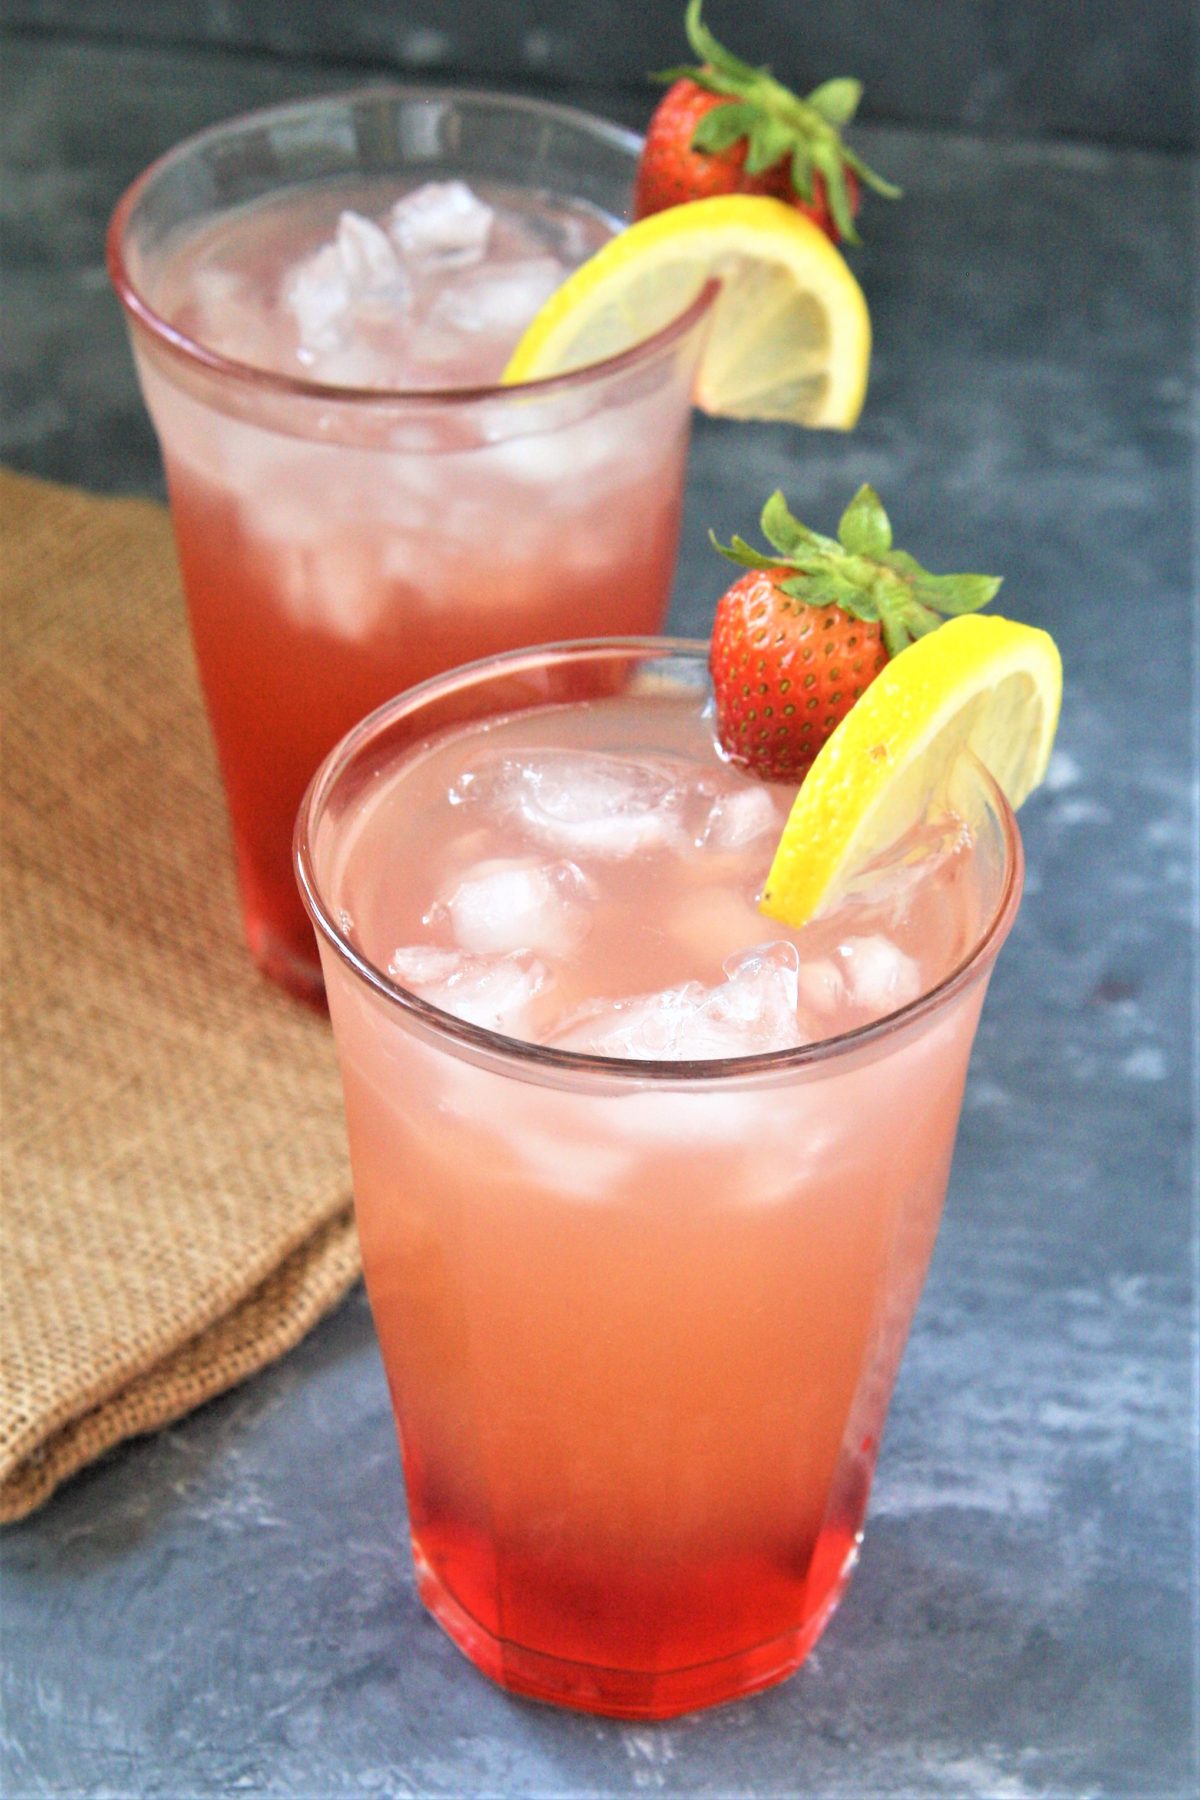 Strawberry Pink Lemonade - The Tasty Bite